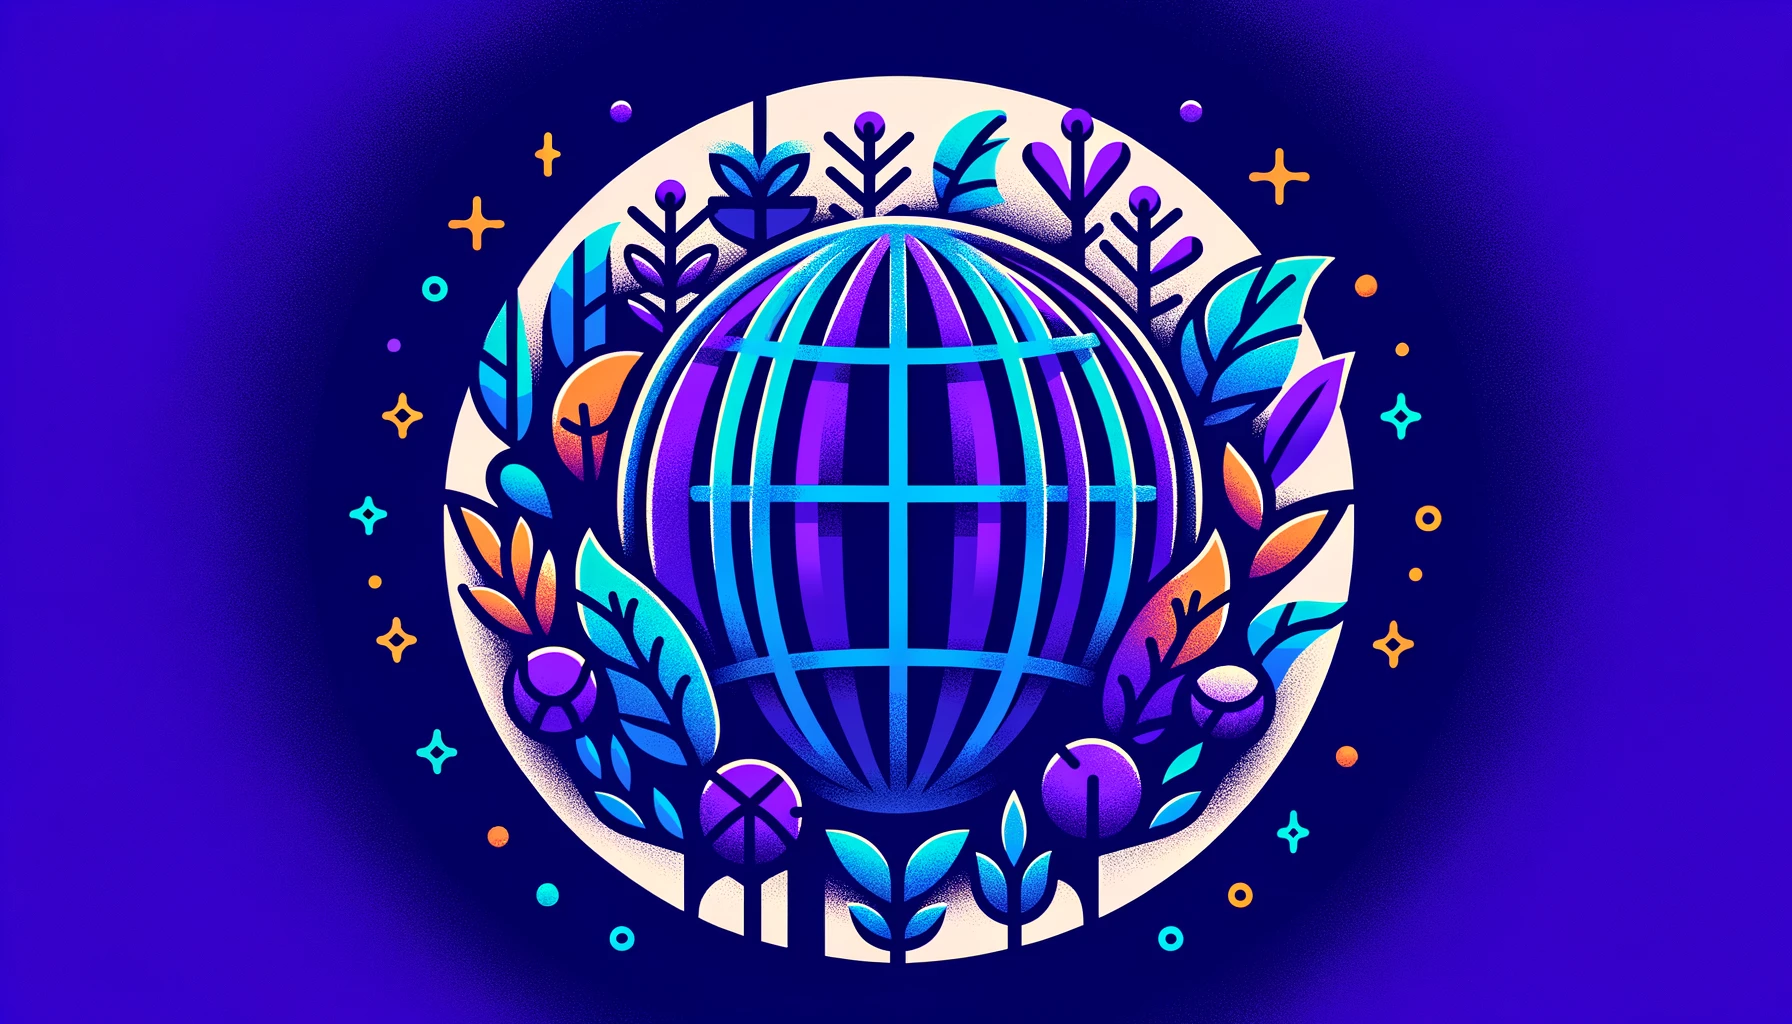 subdomain cover - globe icon and plants